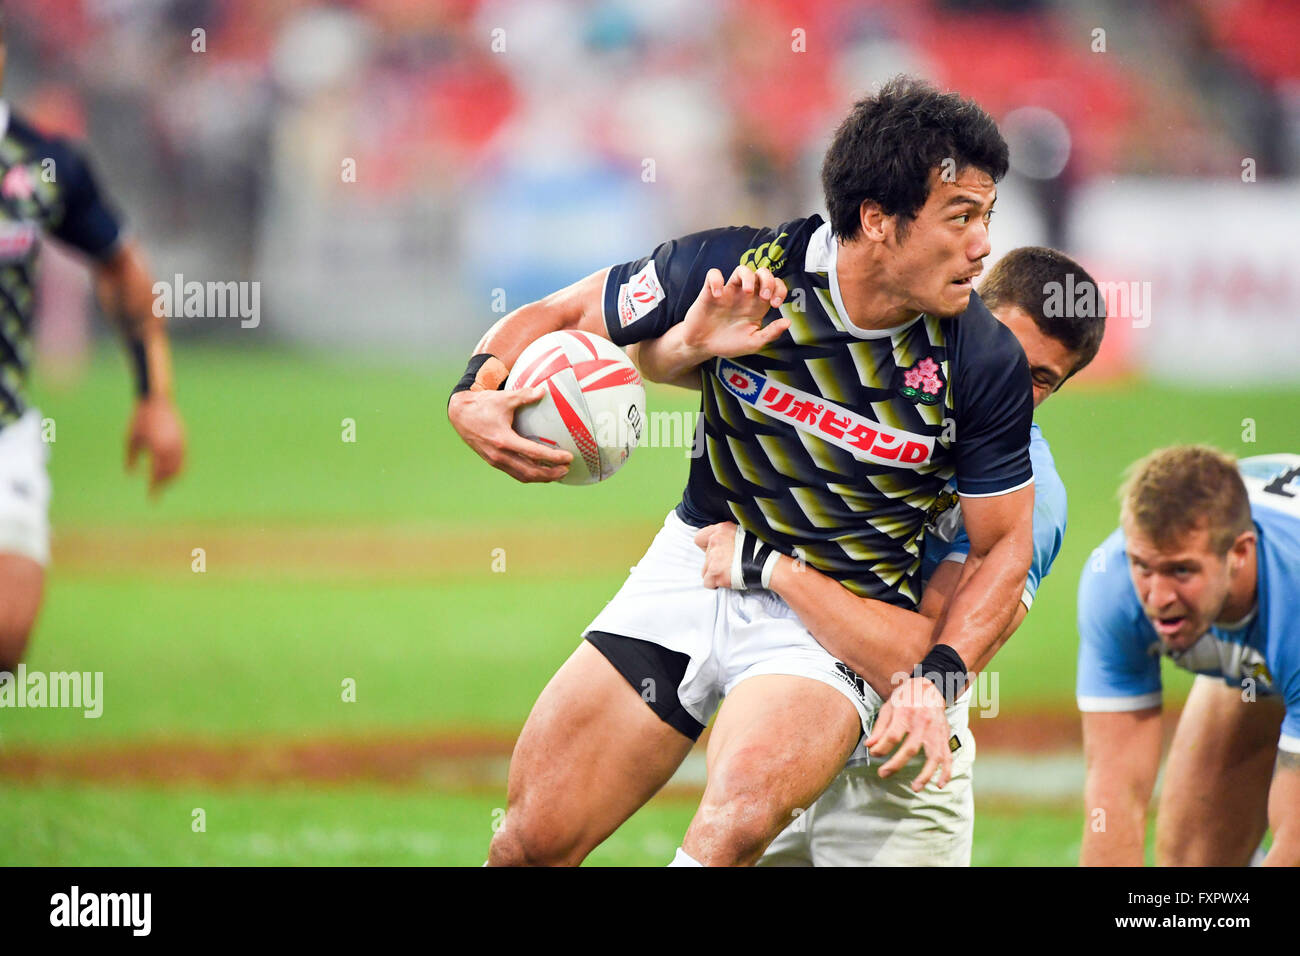 Shohei Toyoshima (JPN), APRL 16, 2016 - Rugby : HSBC Sevens World Series, Singapore Sevens match Japan and Argentina at National Stadium in Singapore. (Photo by Haruhiko Otsuka/AFLO) Stock Photo